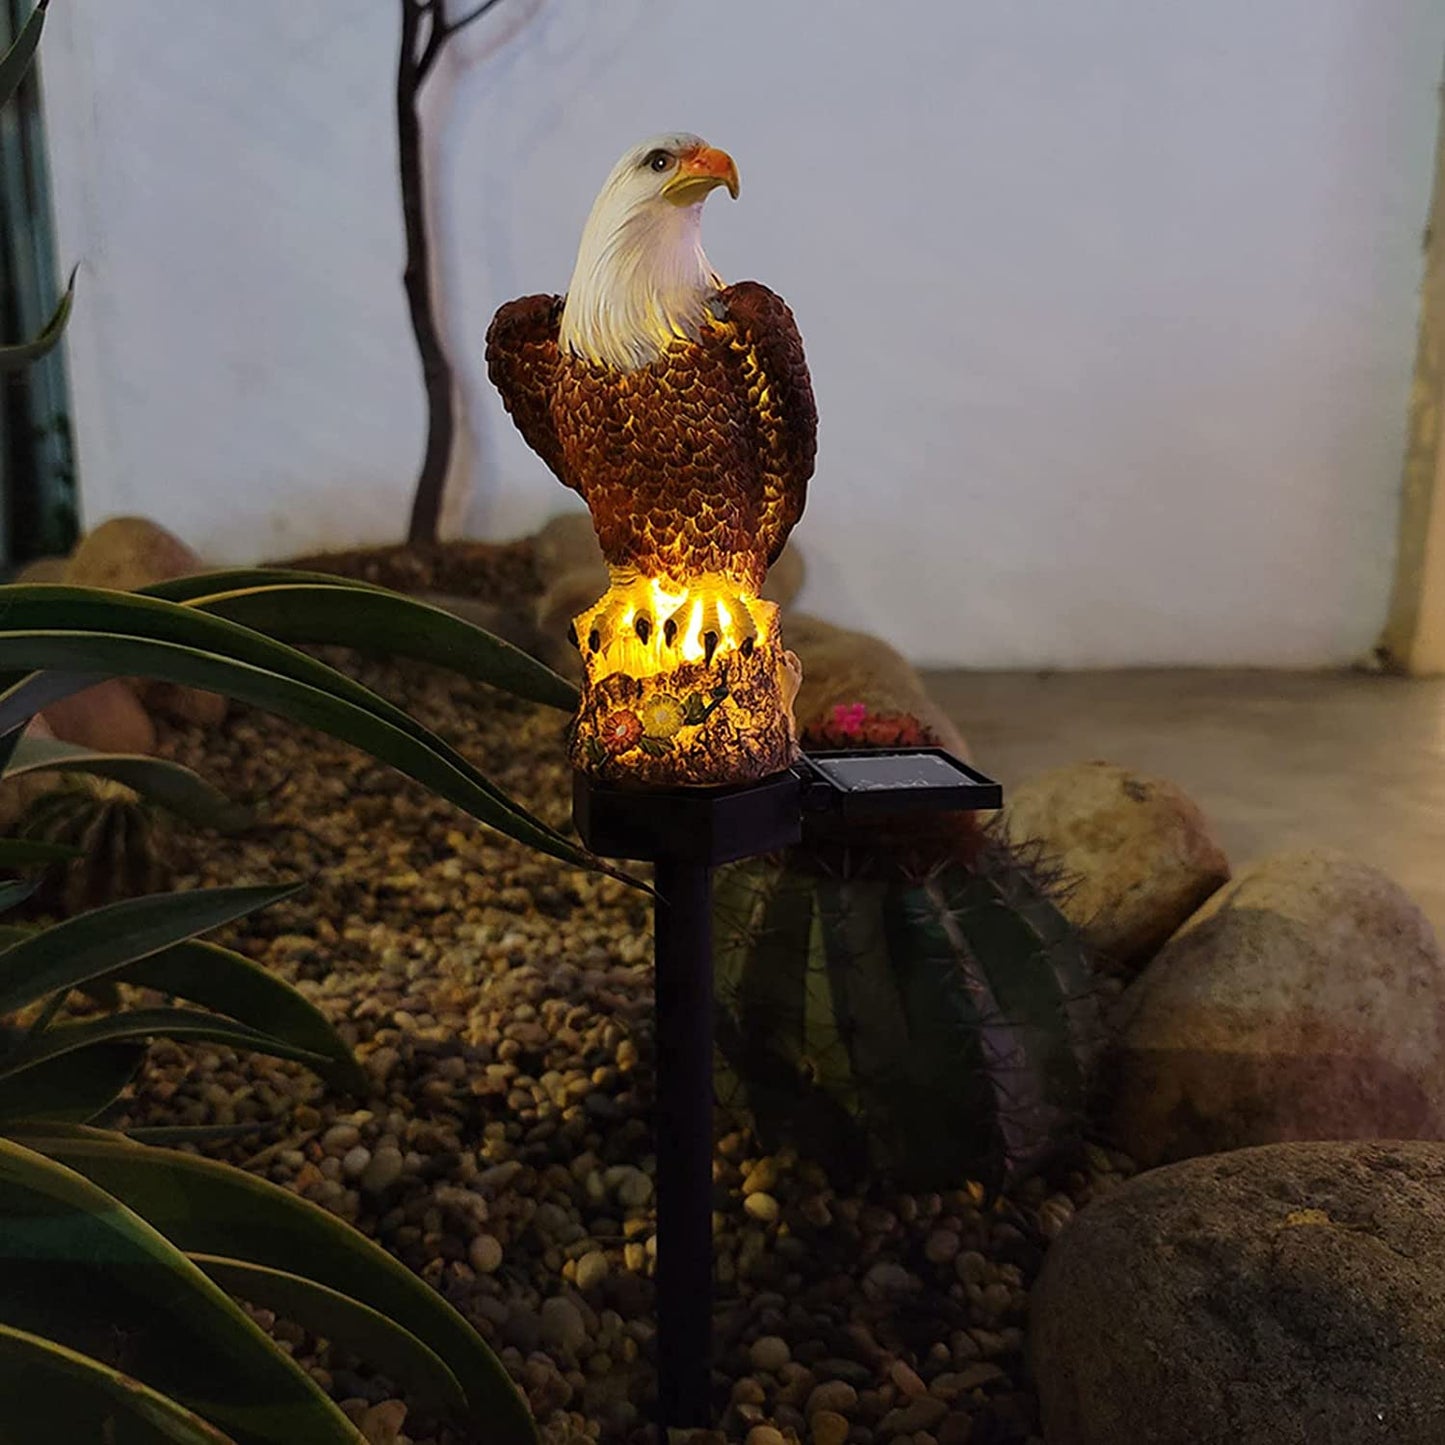 DEDEMCO 17 Inch Eagle Figurine Garden Solar Stake Light,Resin Eagle Solar LED Lights Waterproof,Outdoor Decorative Solar Light Eagle Statue for Patio Yard Decor